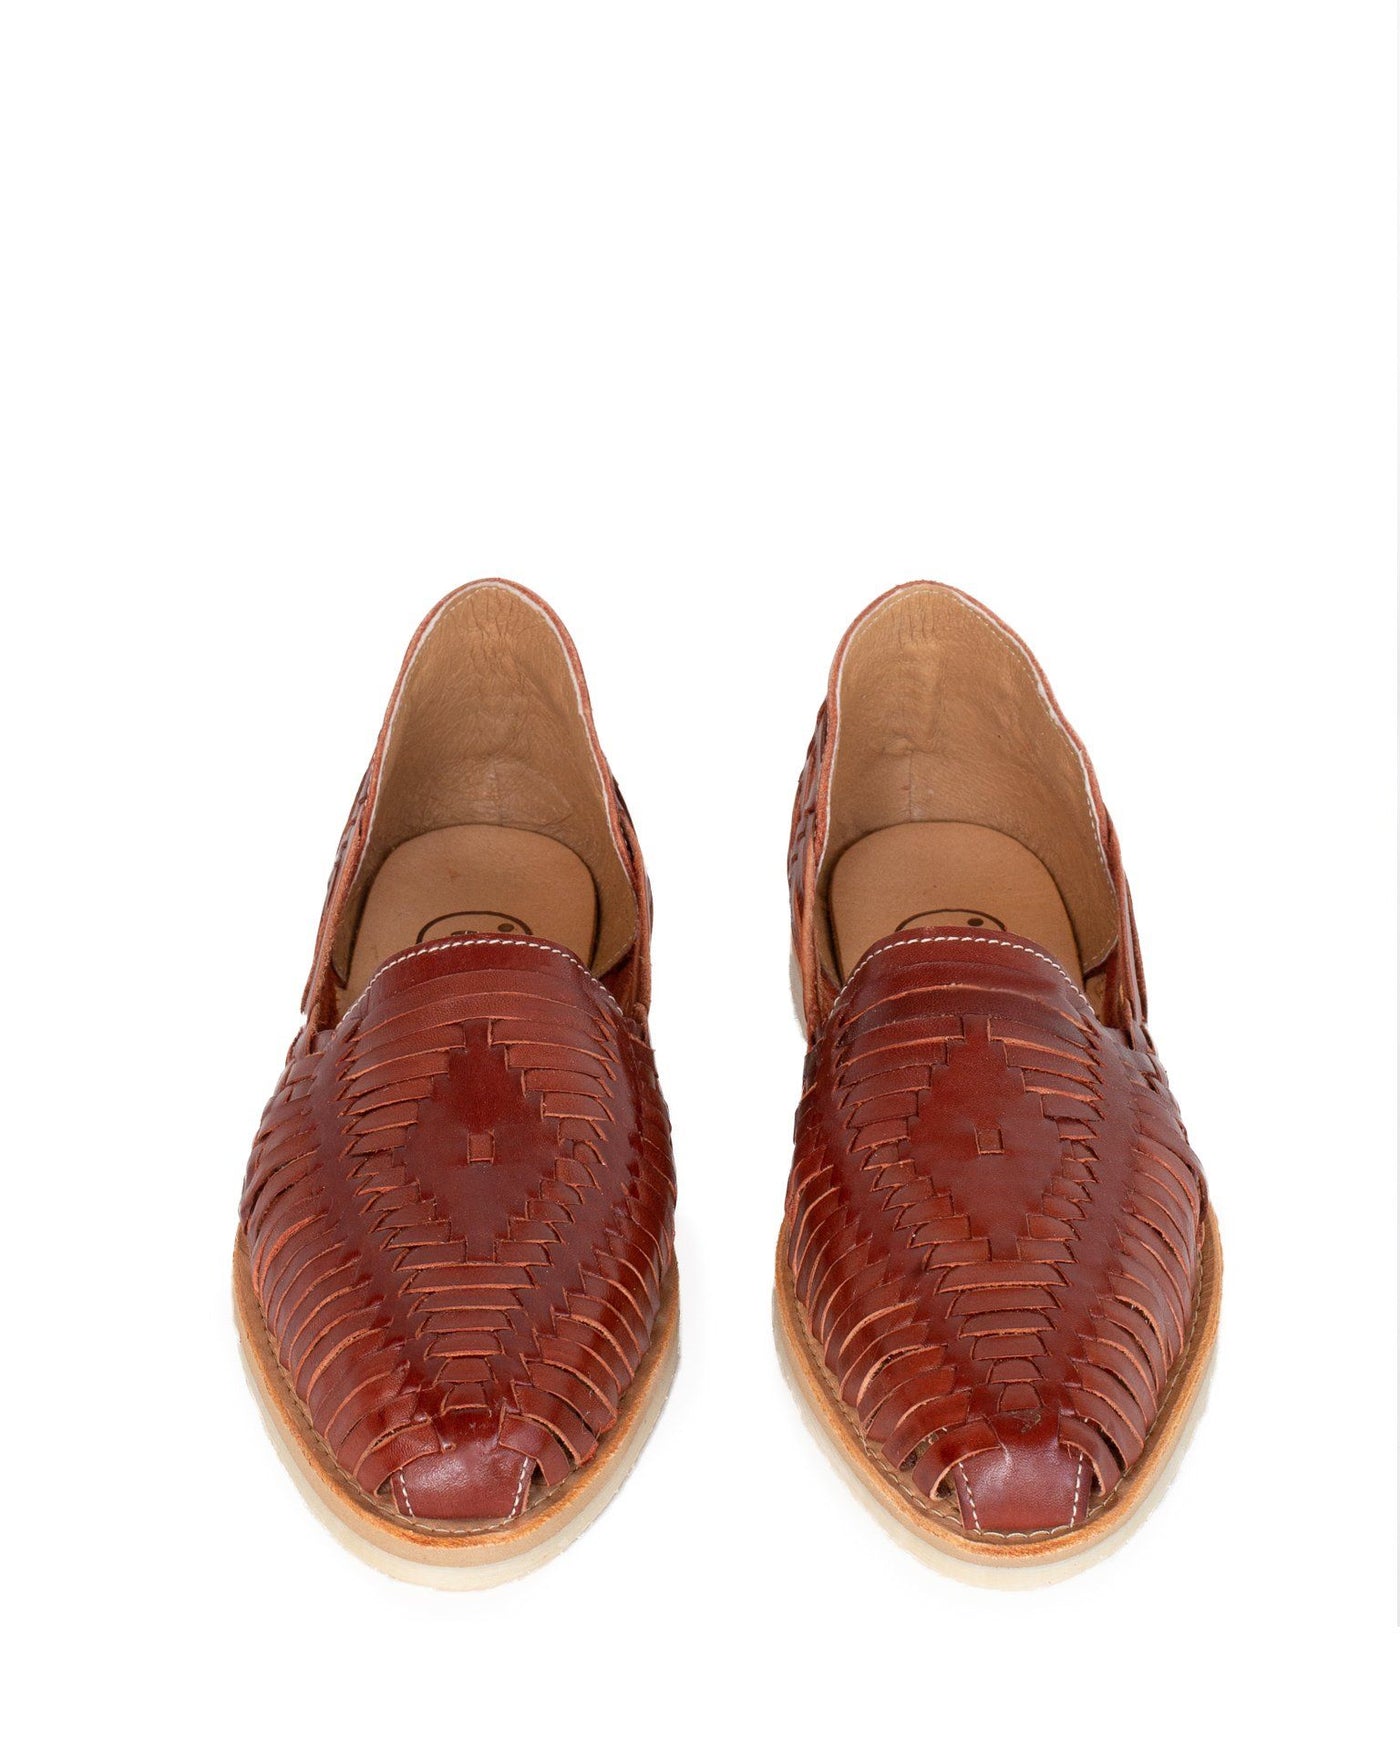 Huaraches - The Huaraches - Natural Leather